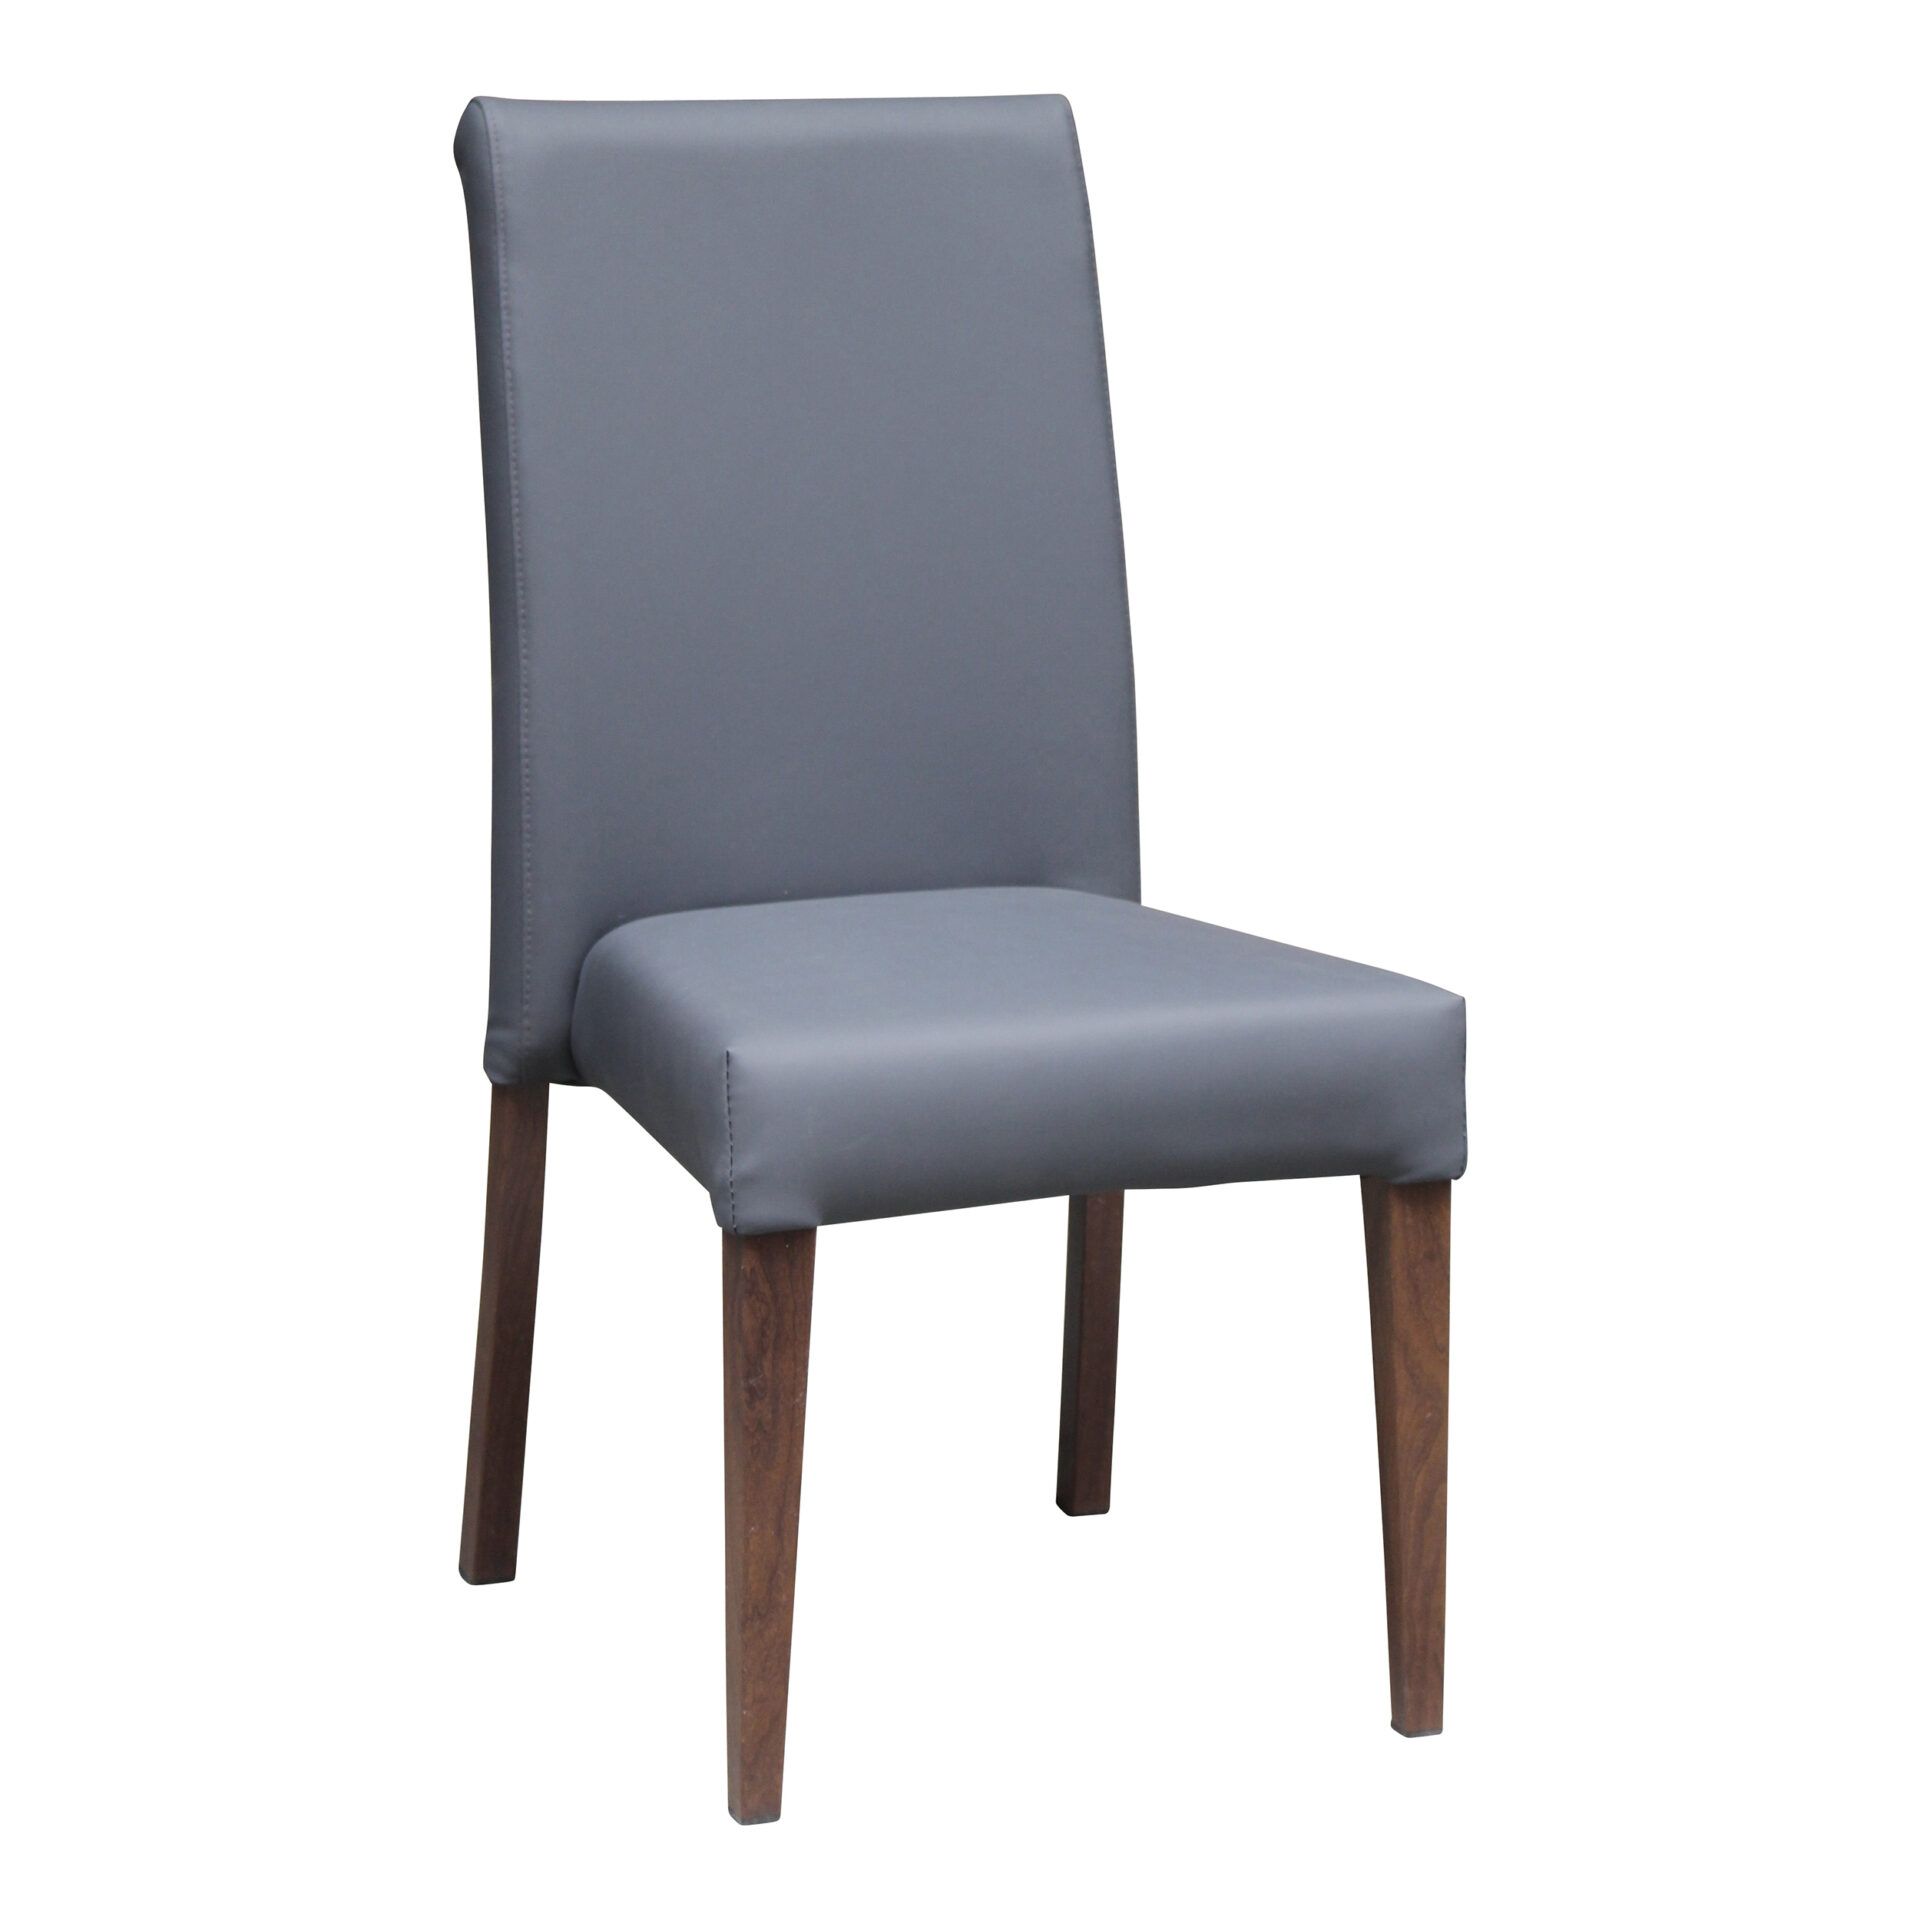 London Chair Grey 3 1